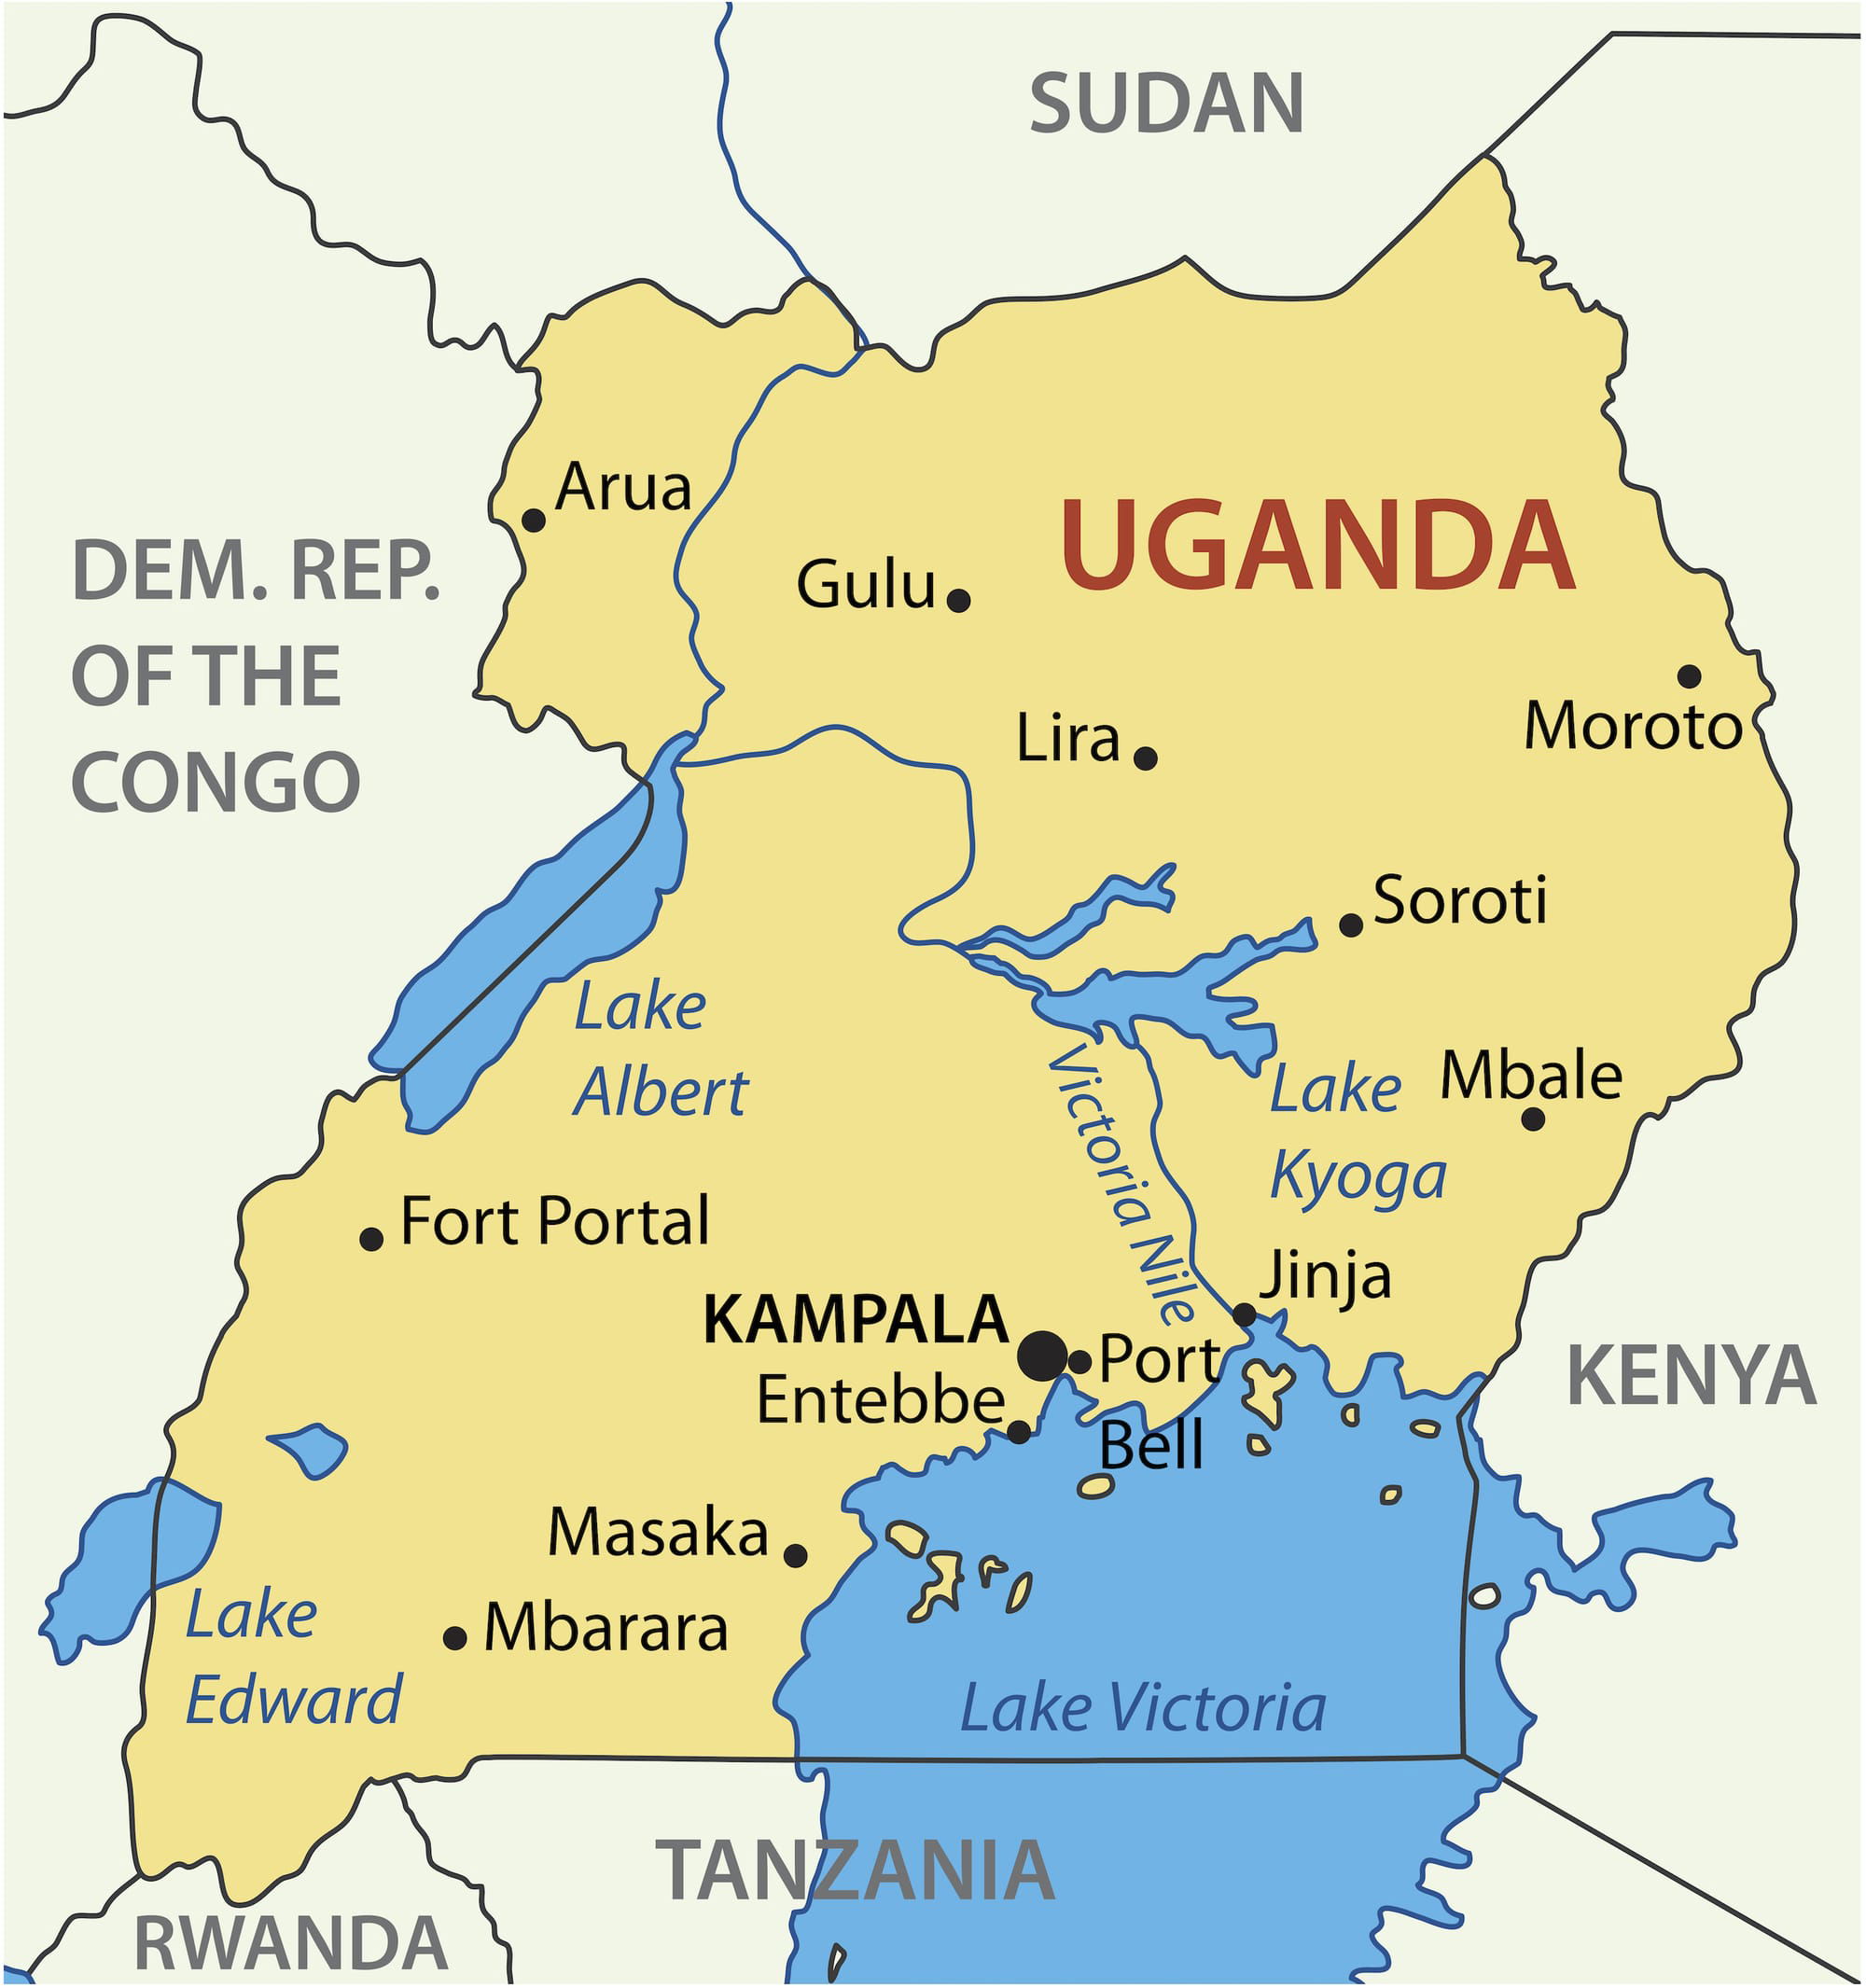 The regions of Uganda